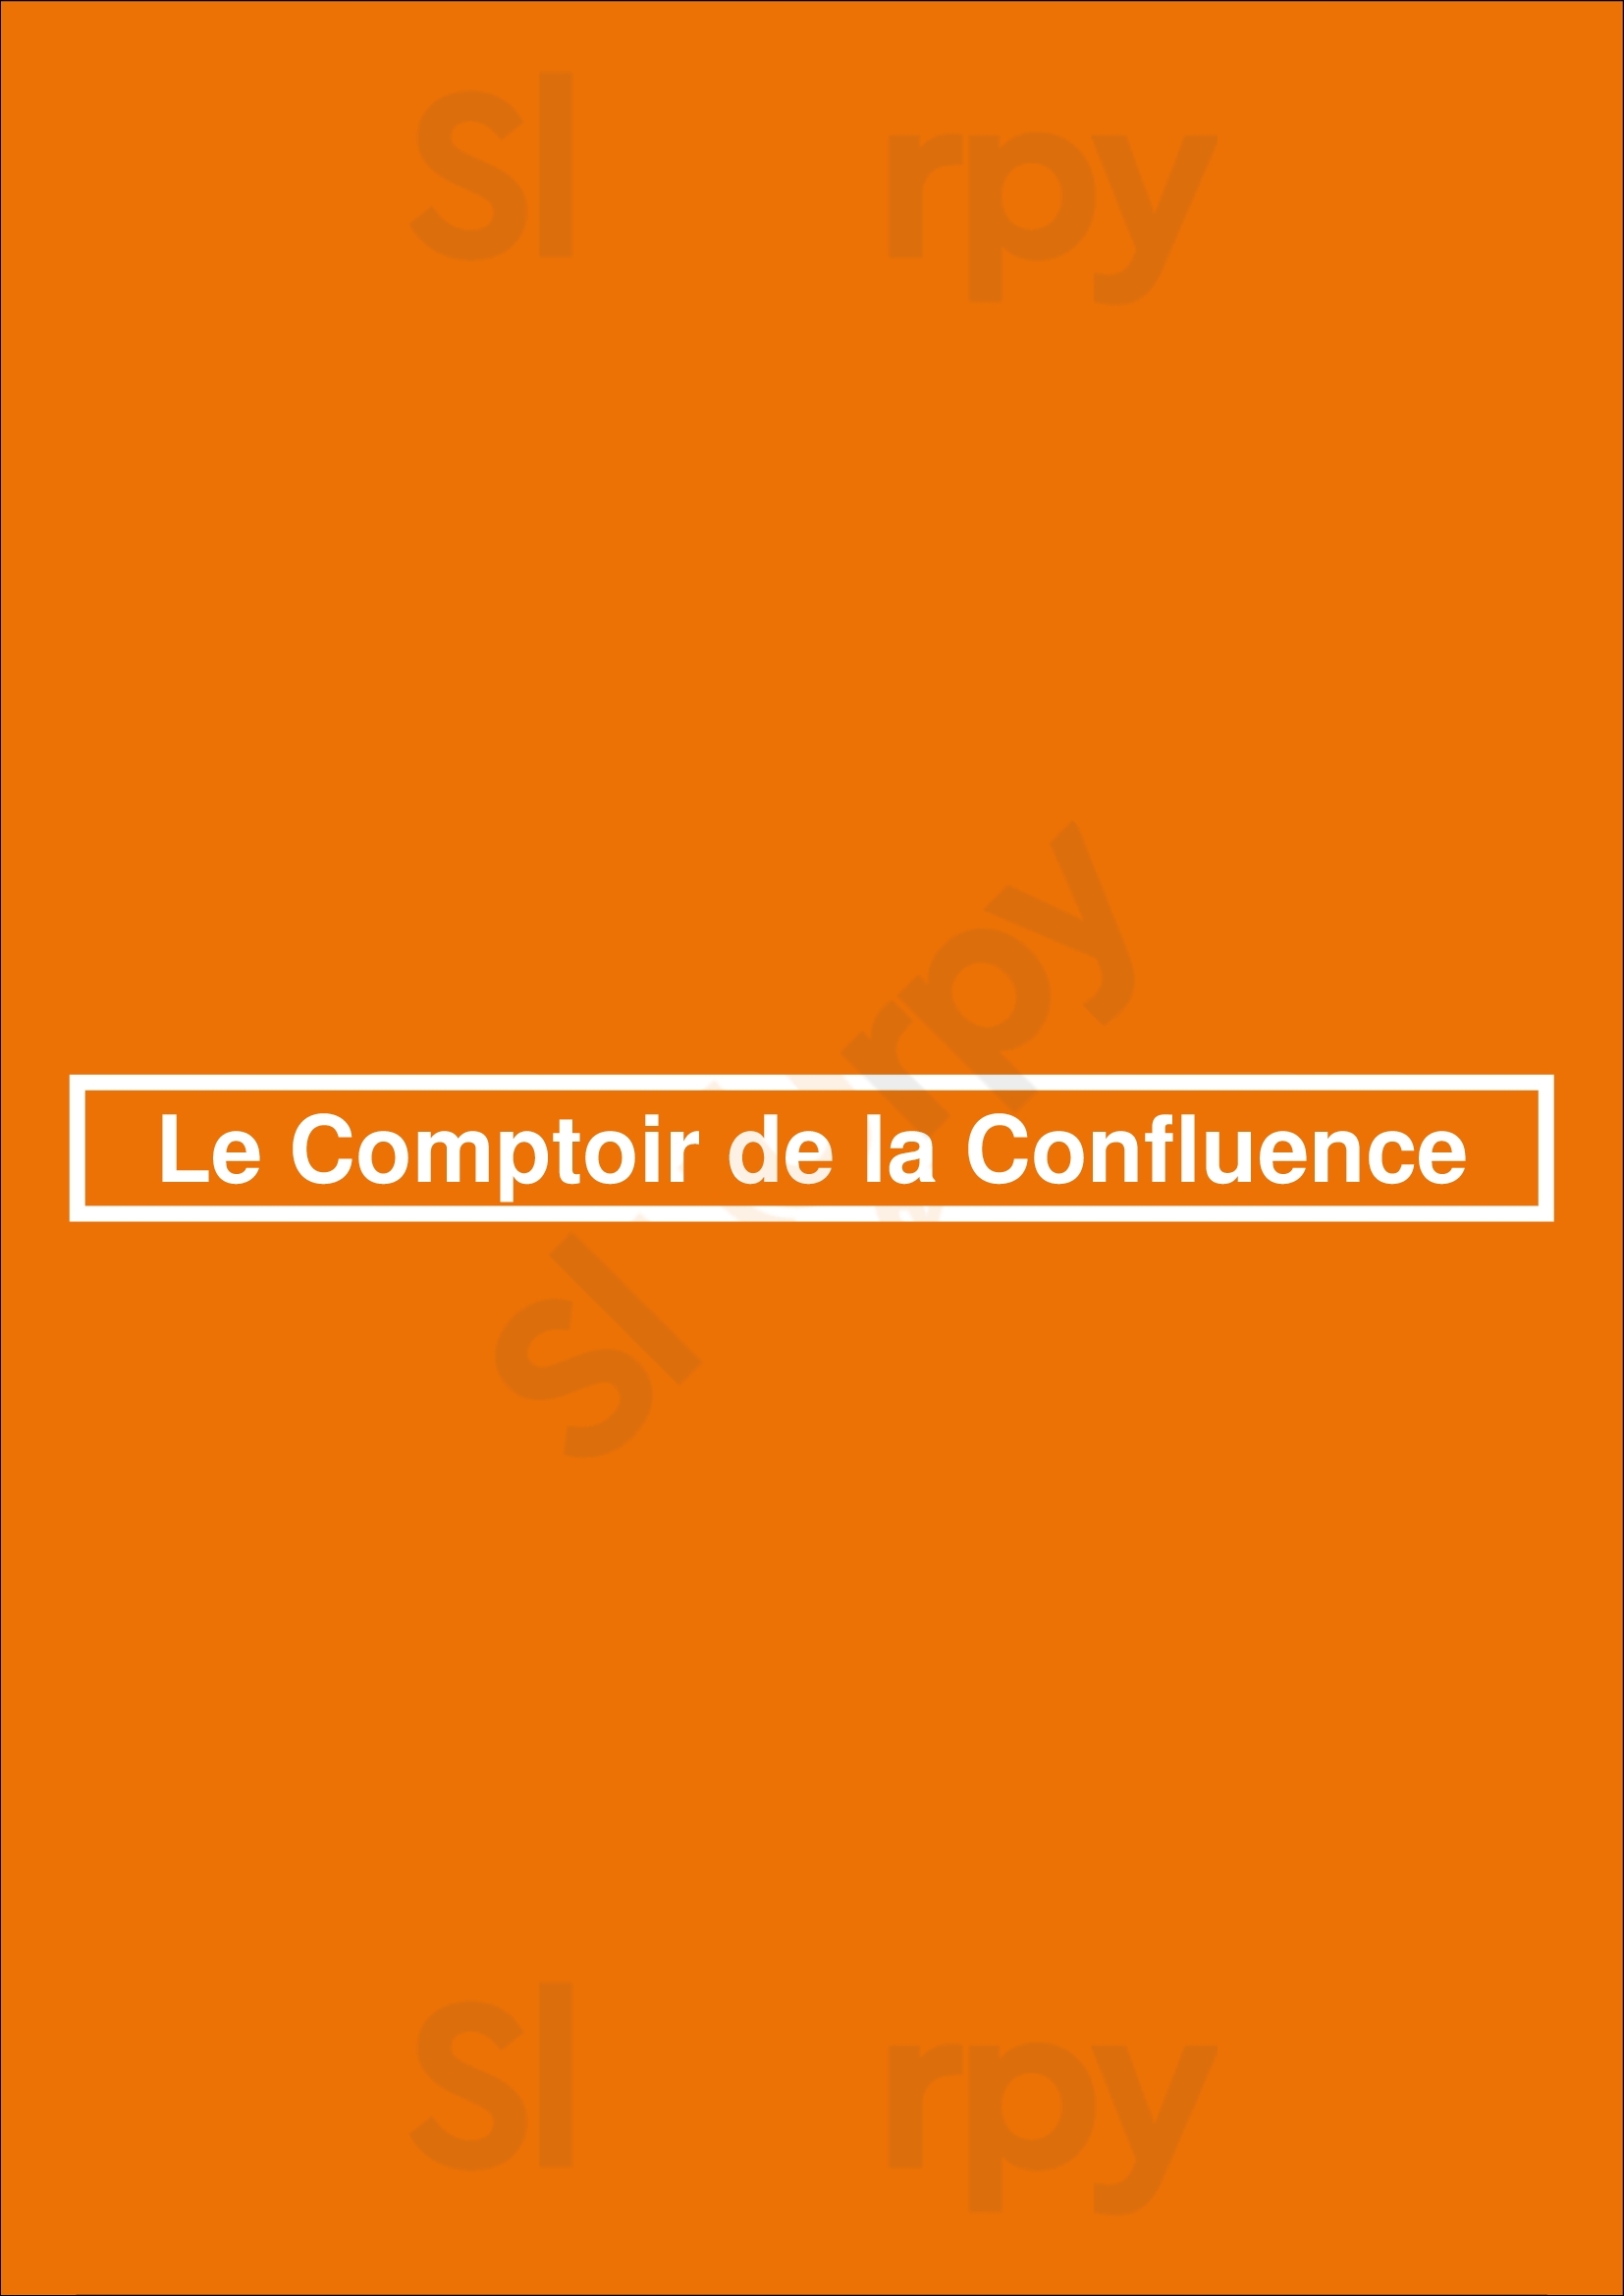 Le Comptoir De La Confluence Lyon Menu - 1